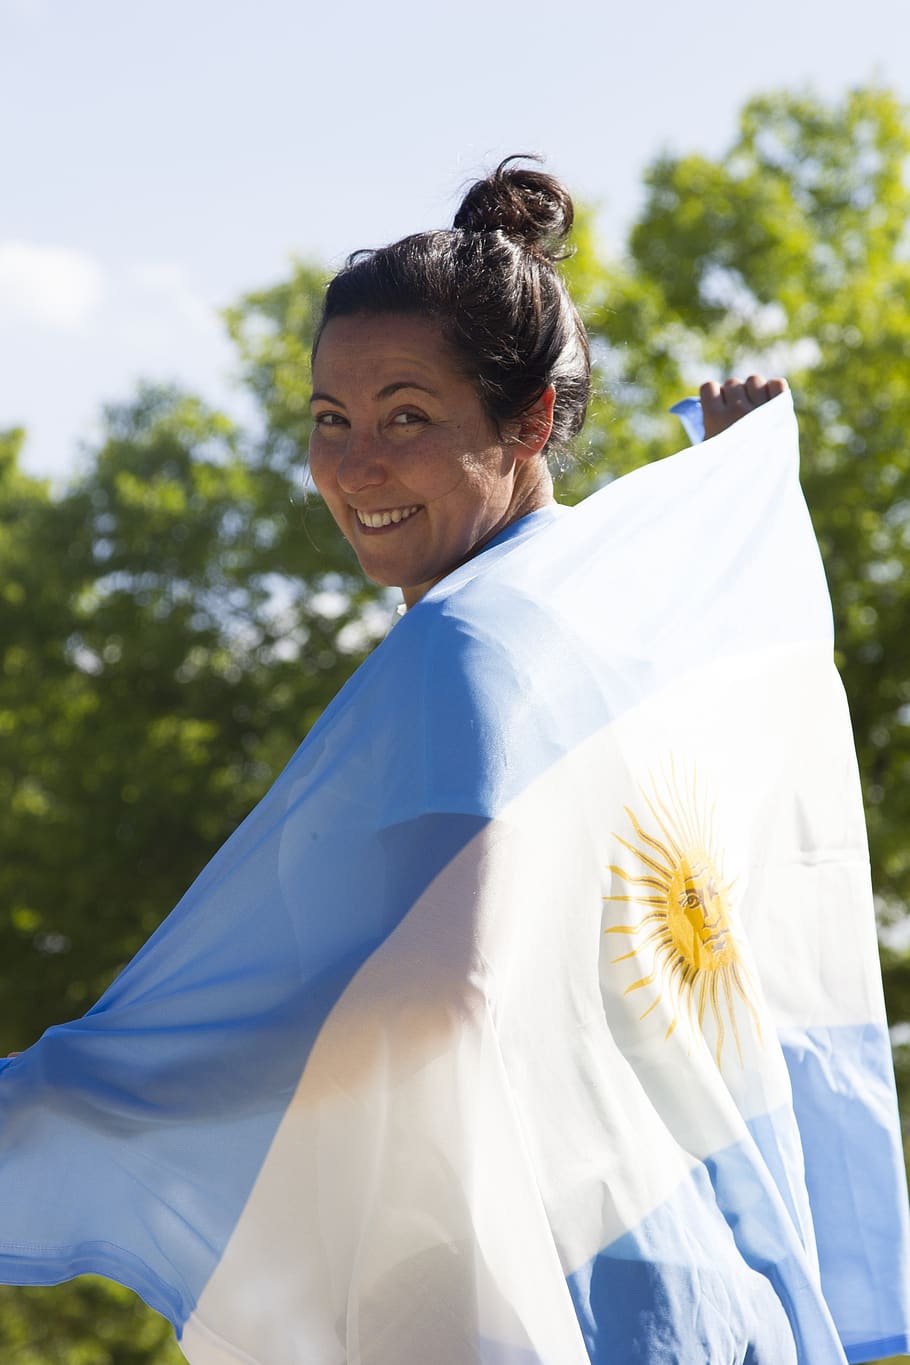 orgullo, bandera argentina, bandera, celeste, nacional, sol, nación, país, llameante, blanco